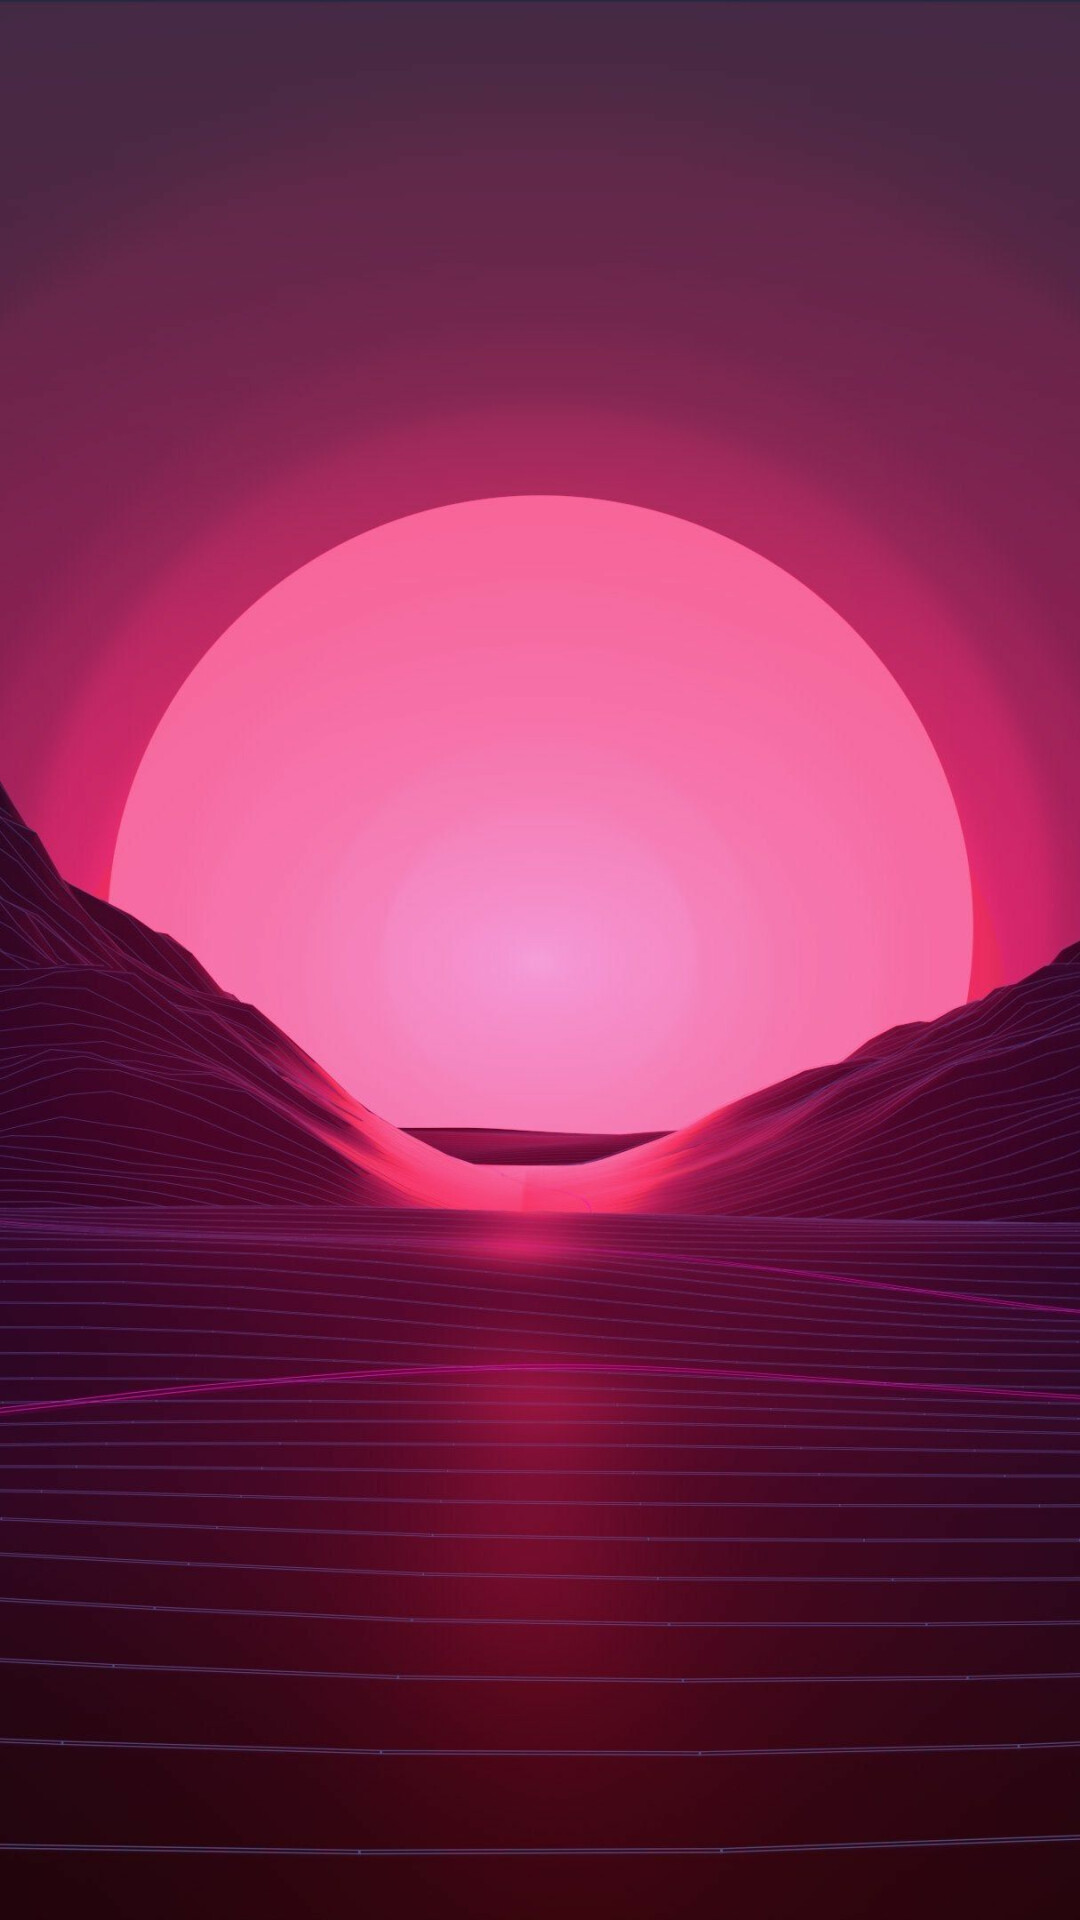 Sunset: Sundown, Solar disk crossing the horizon, Minimalism. 1080x1920 Full HD Background.